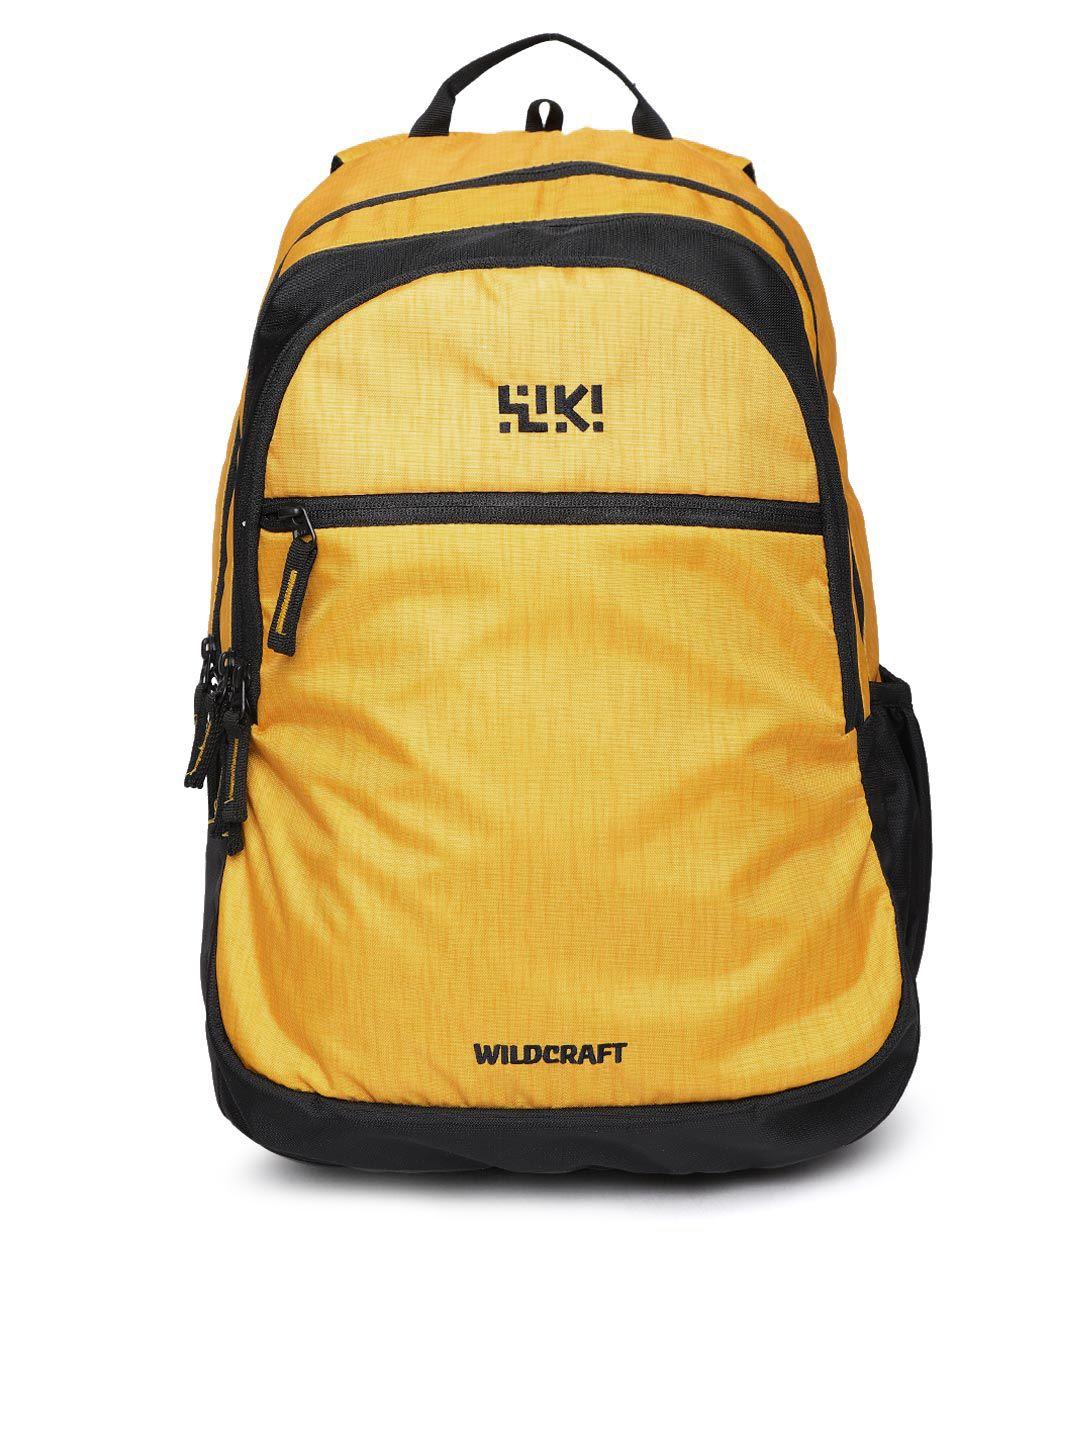 wildcraft-unisex-yellow-&-black-solid-backpack